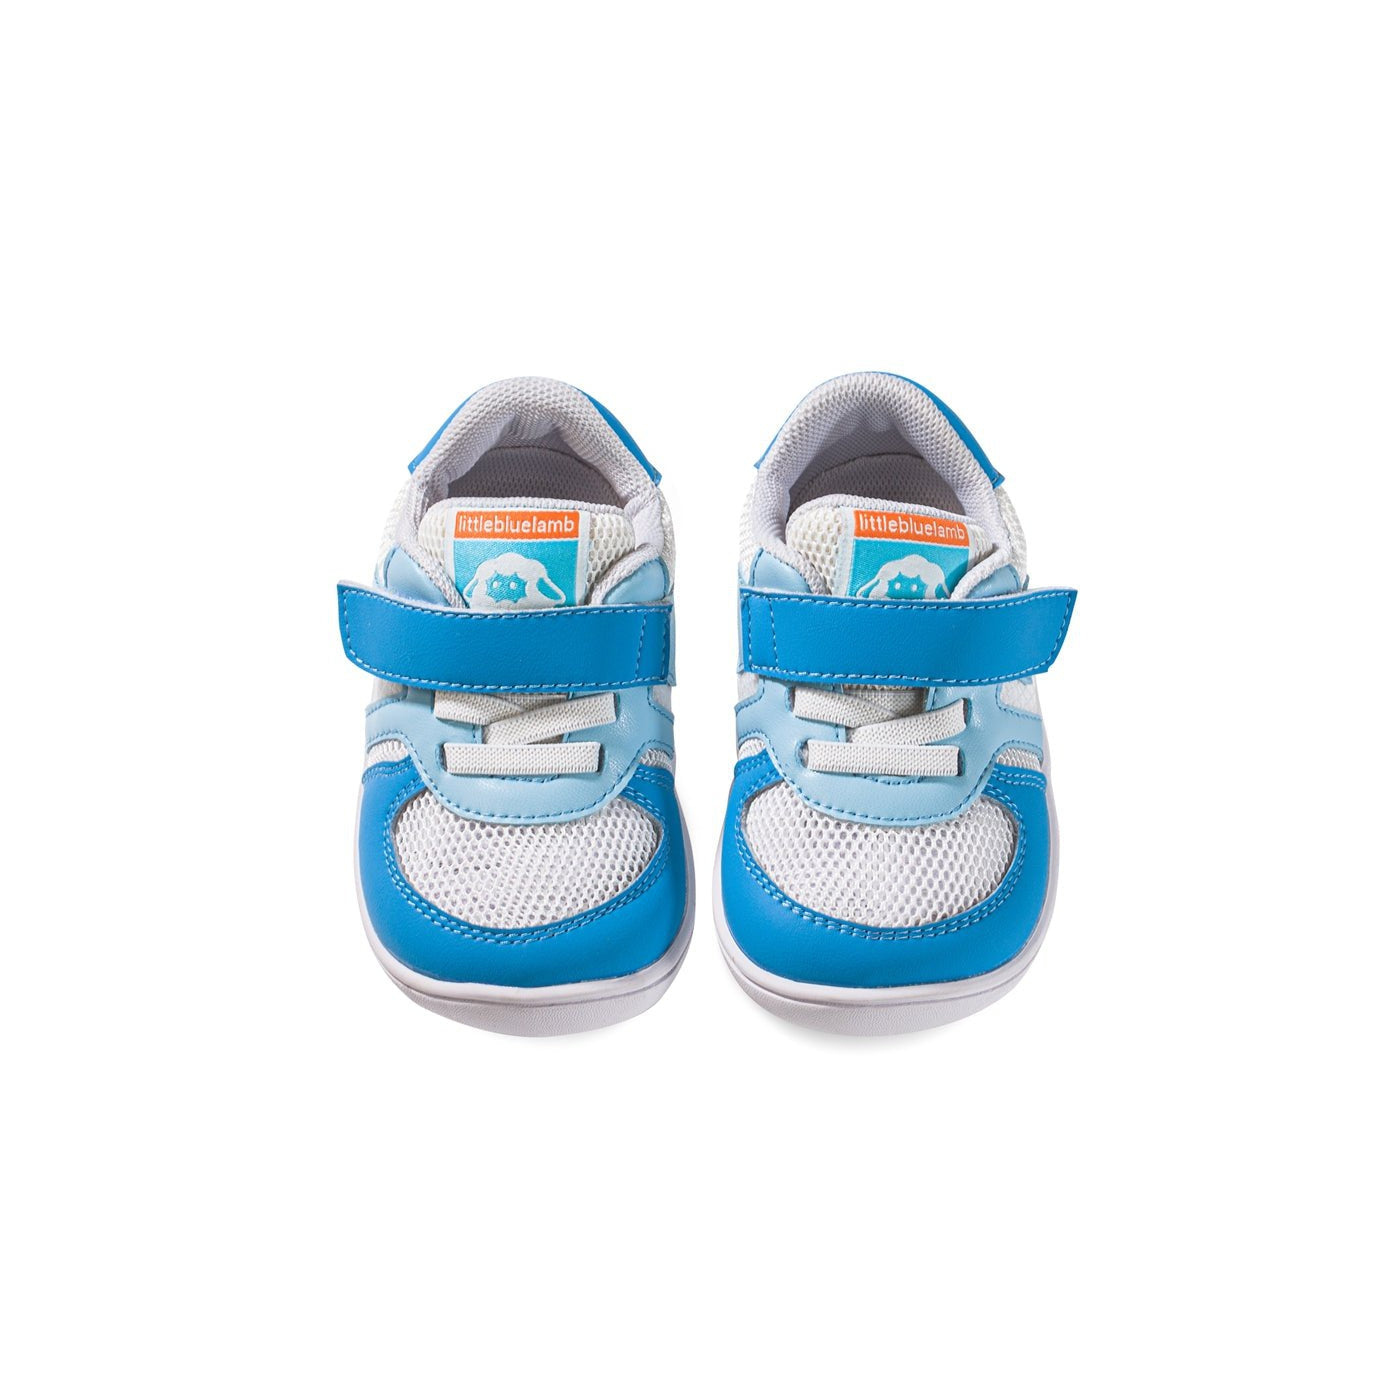 Cotton Candy Soft Sole Anti-slip Pre-walker Blue Baby Boy Sneakers - 0cm